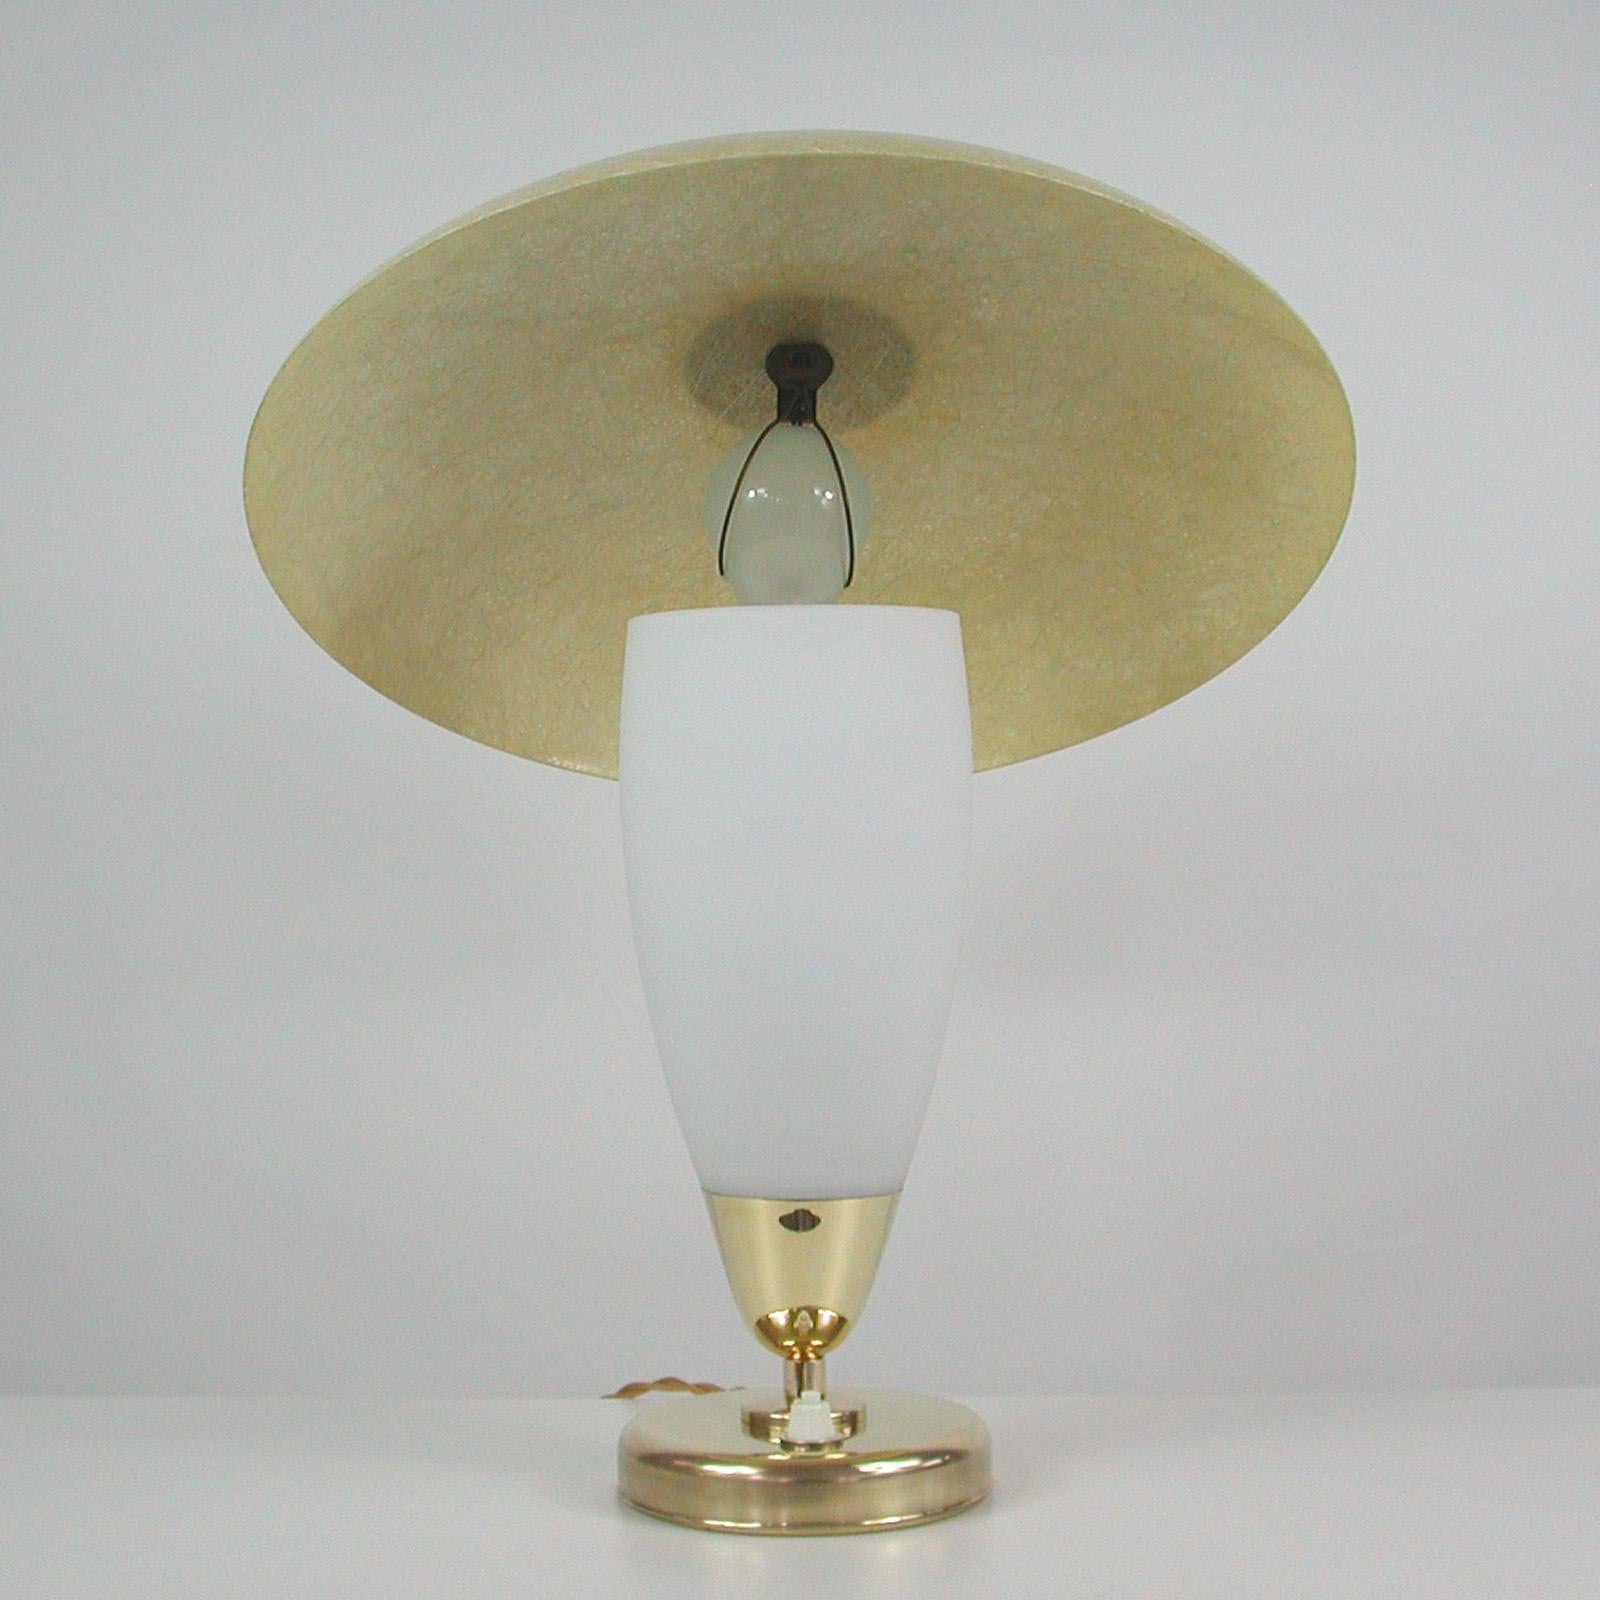 Midcentury Swedish Modern Brass, Opaline and Fiberglass Saucer Table Lamp, 1950s For Sale 7